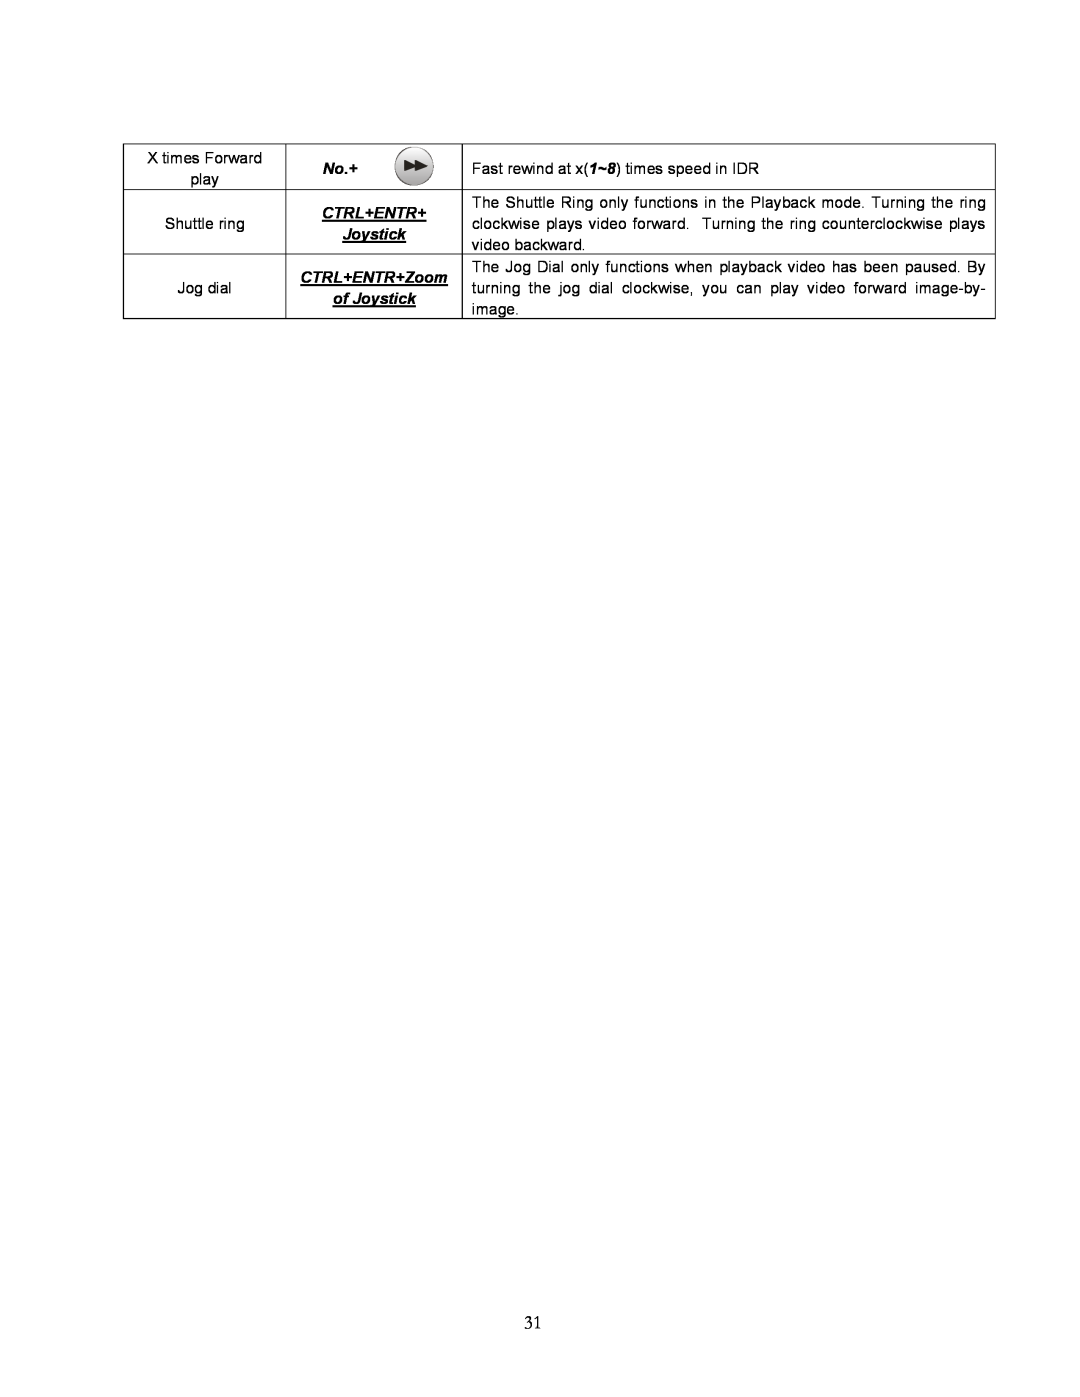 Speco Technologies KBD-927 instruction manual No.+, Ctrl+Entr+, CTRL+ENTR+Zoom, of Joystick 